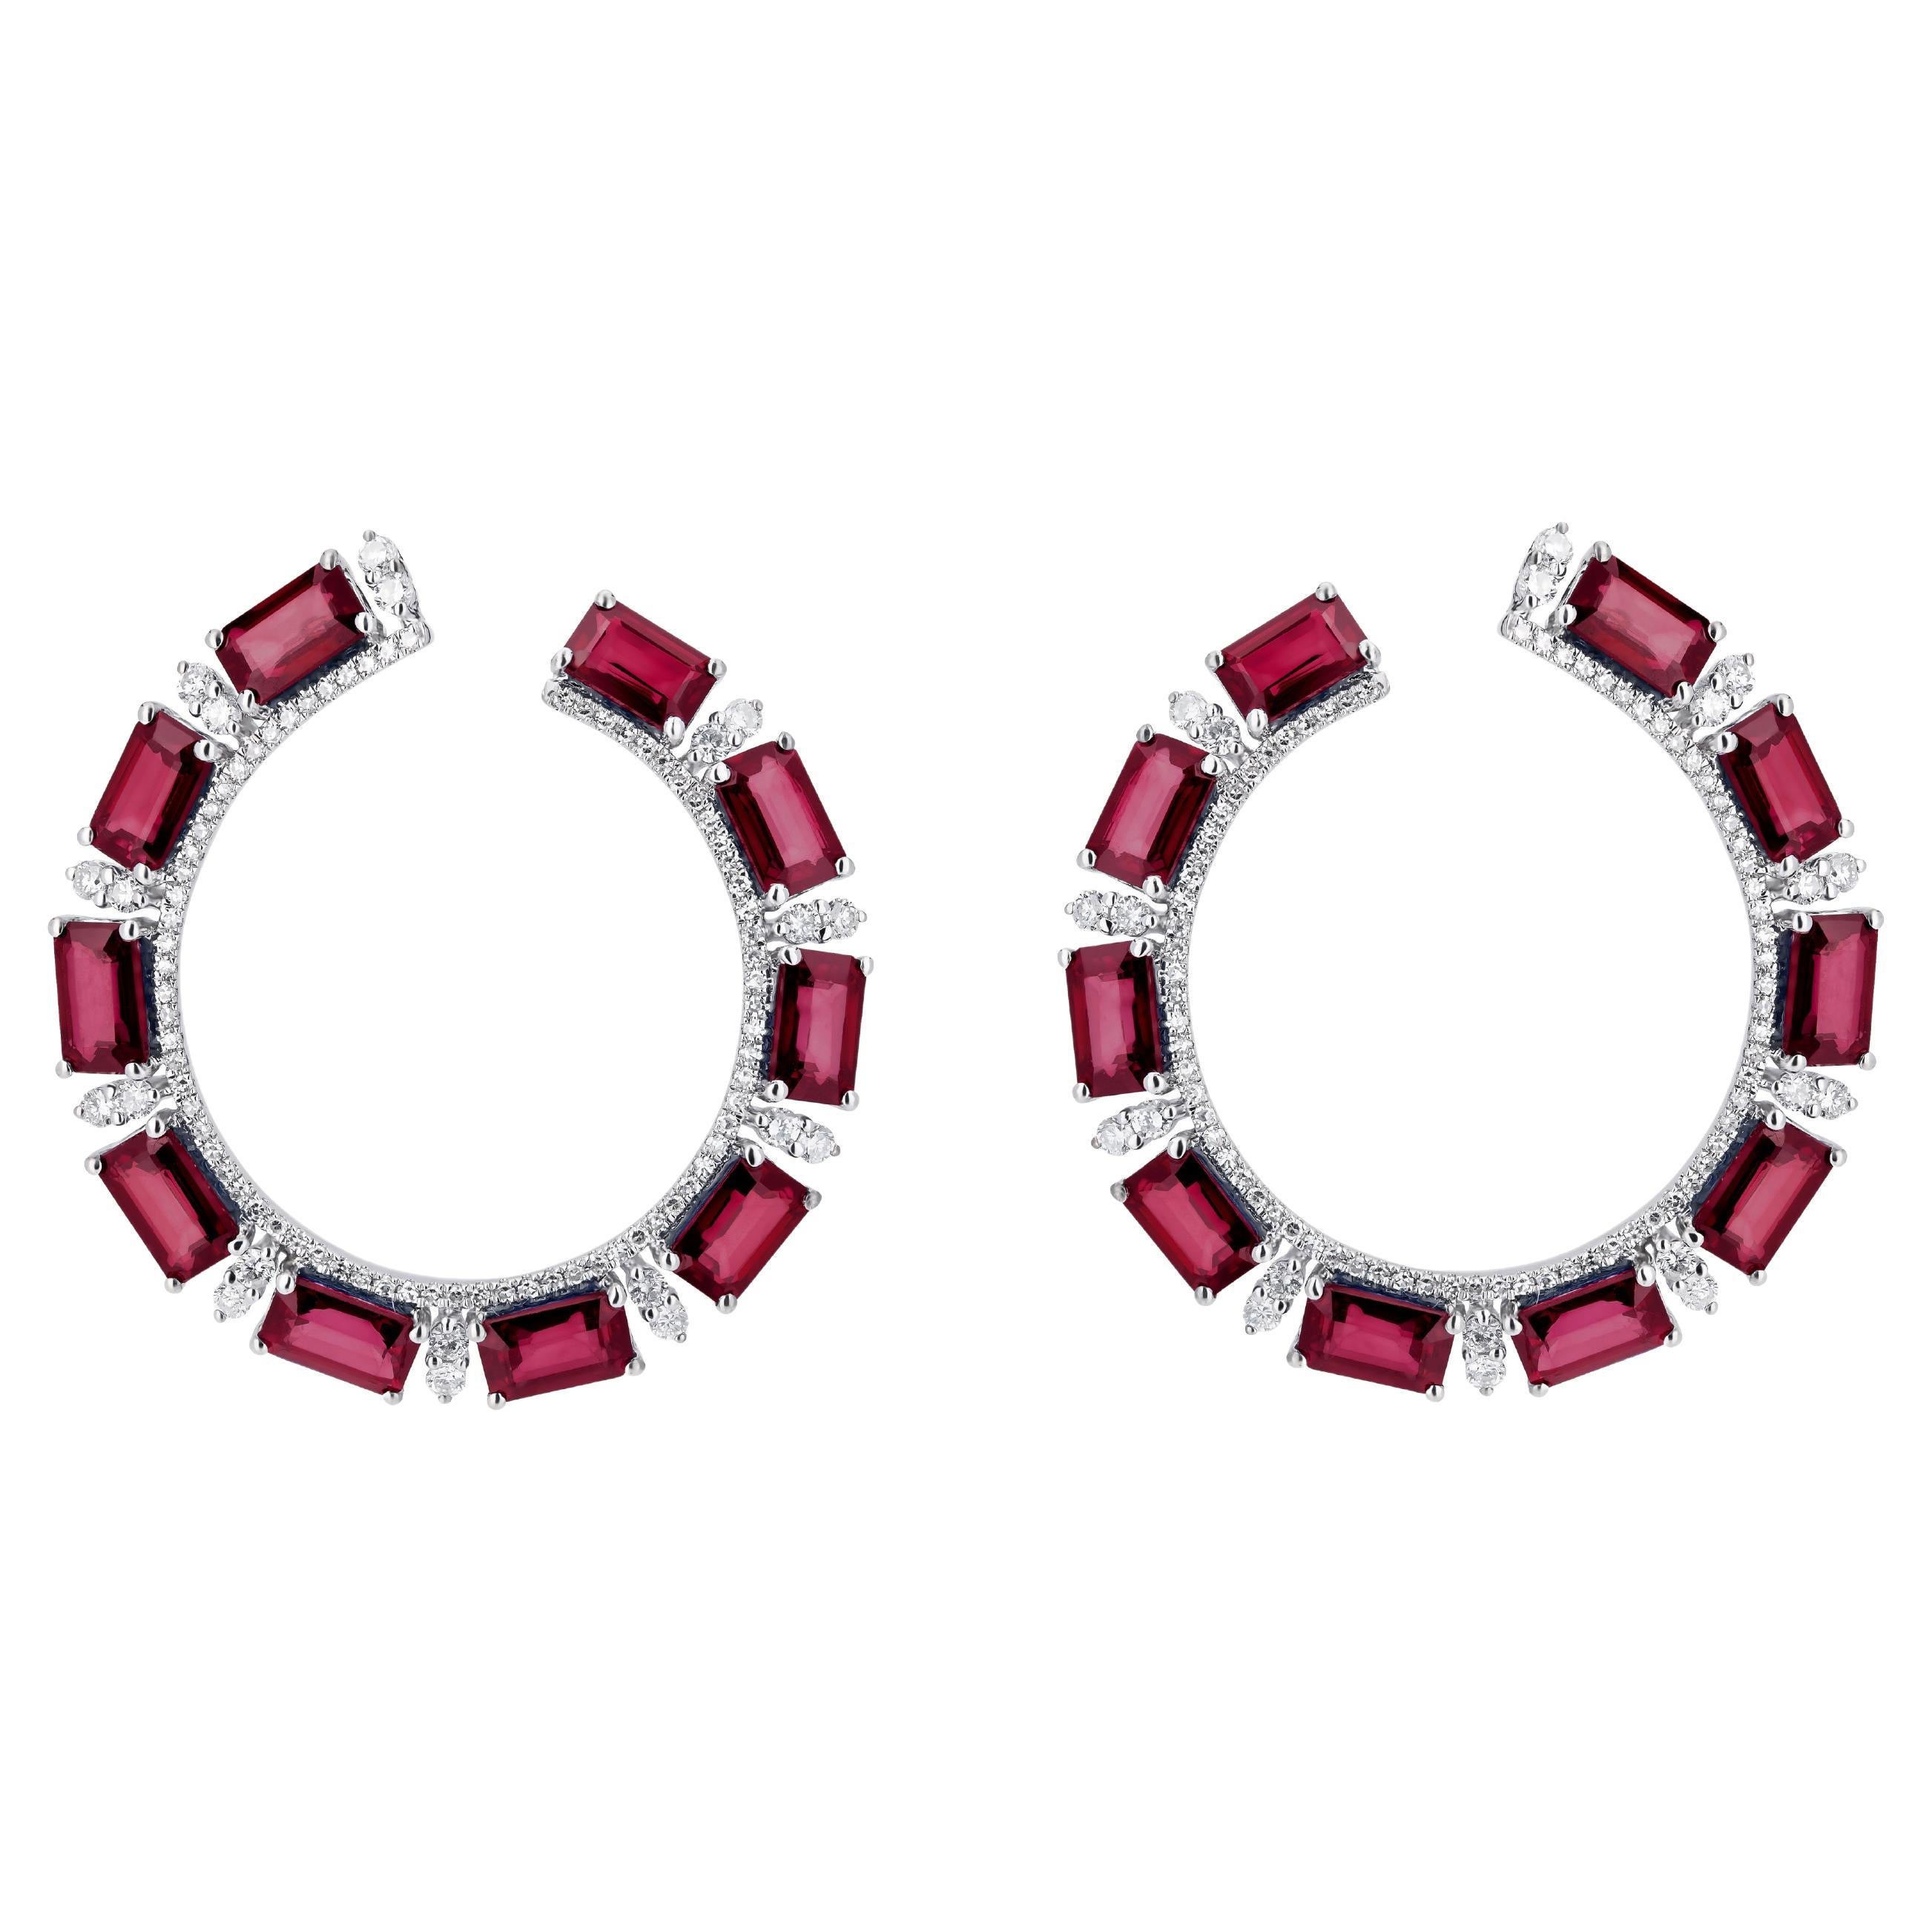 Gemistry 7.15cttw. Octagon Ruby and Diamond Hoop Earrings in 18k White Gold